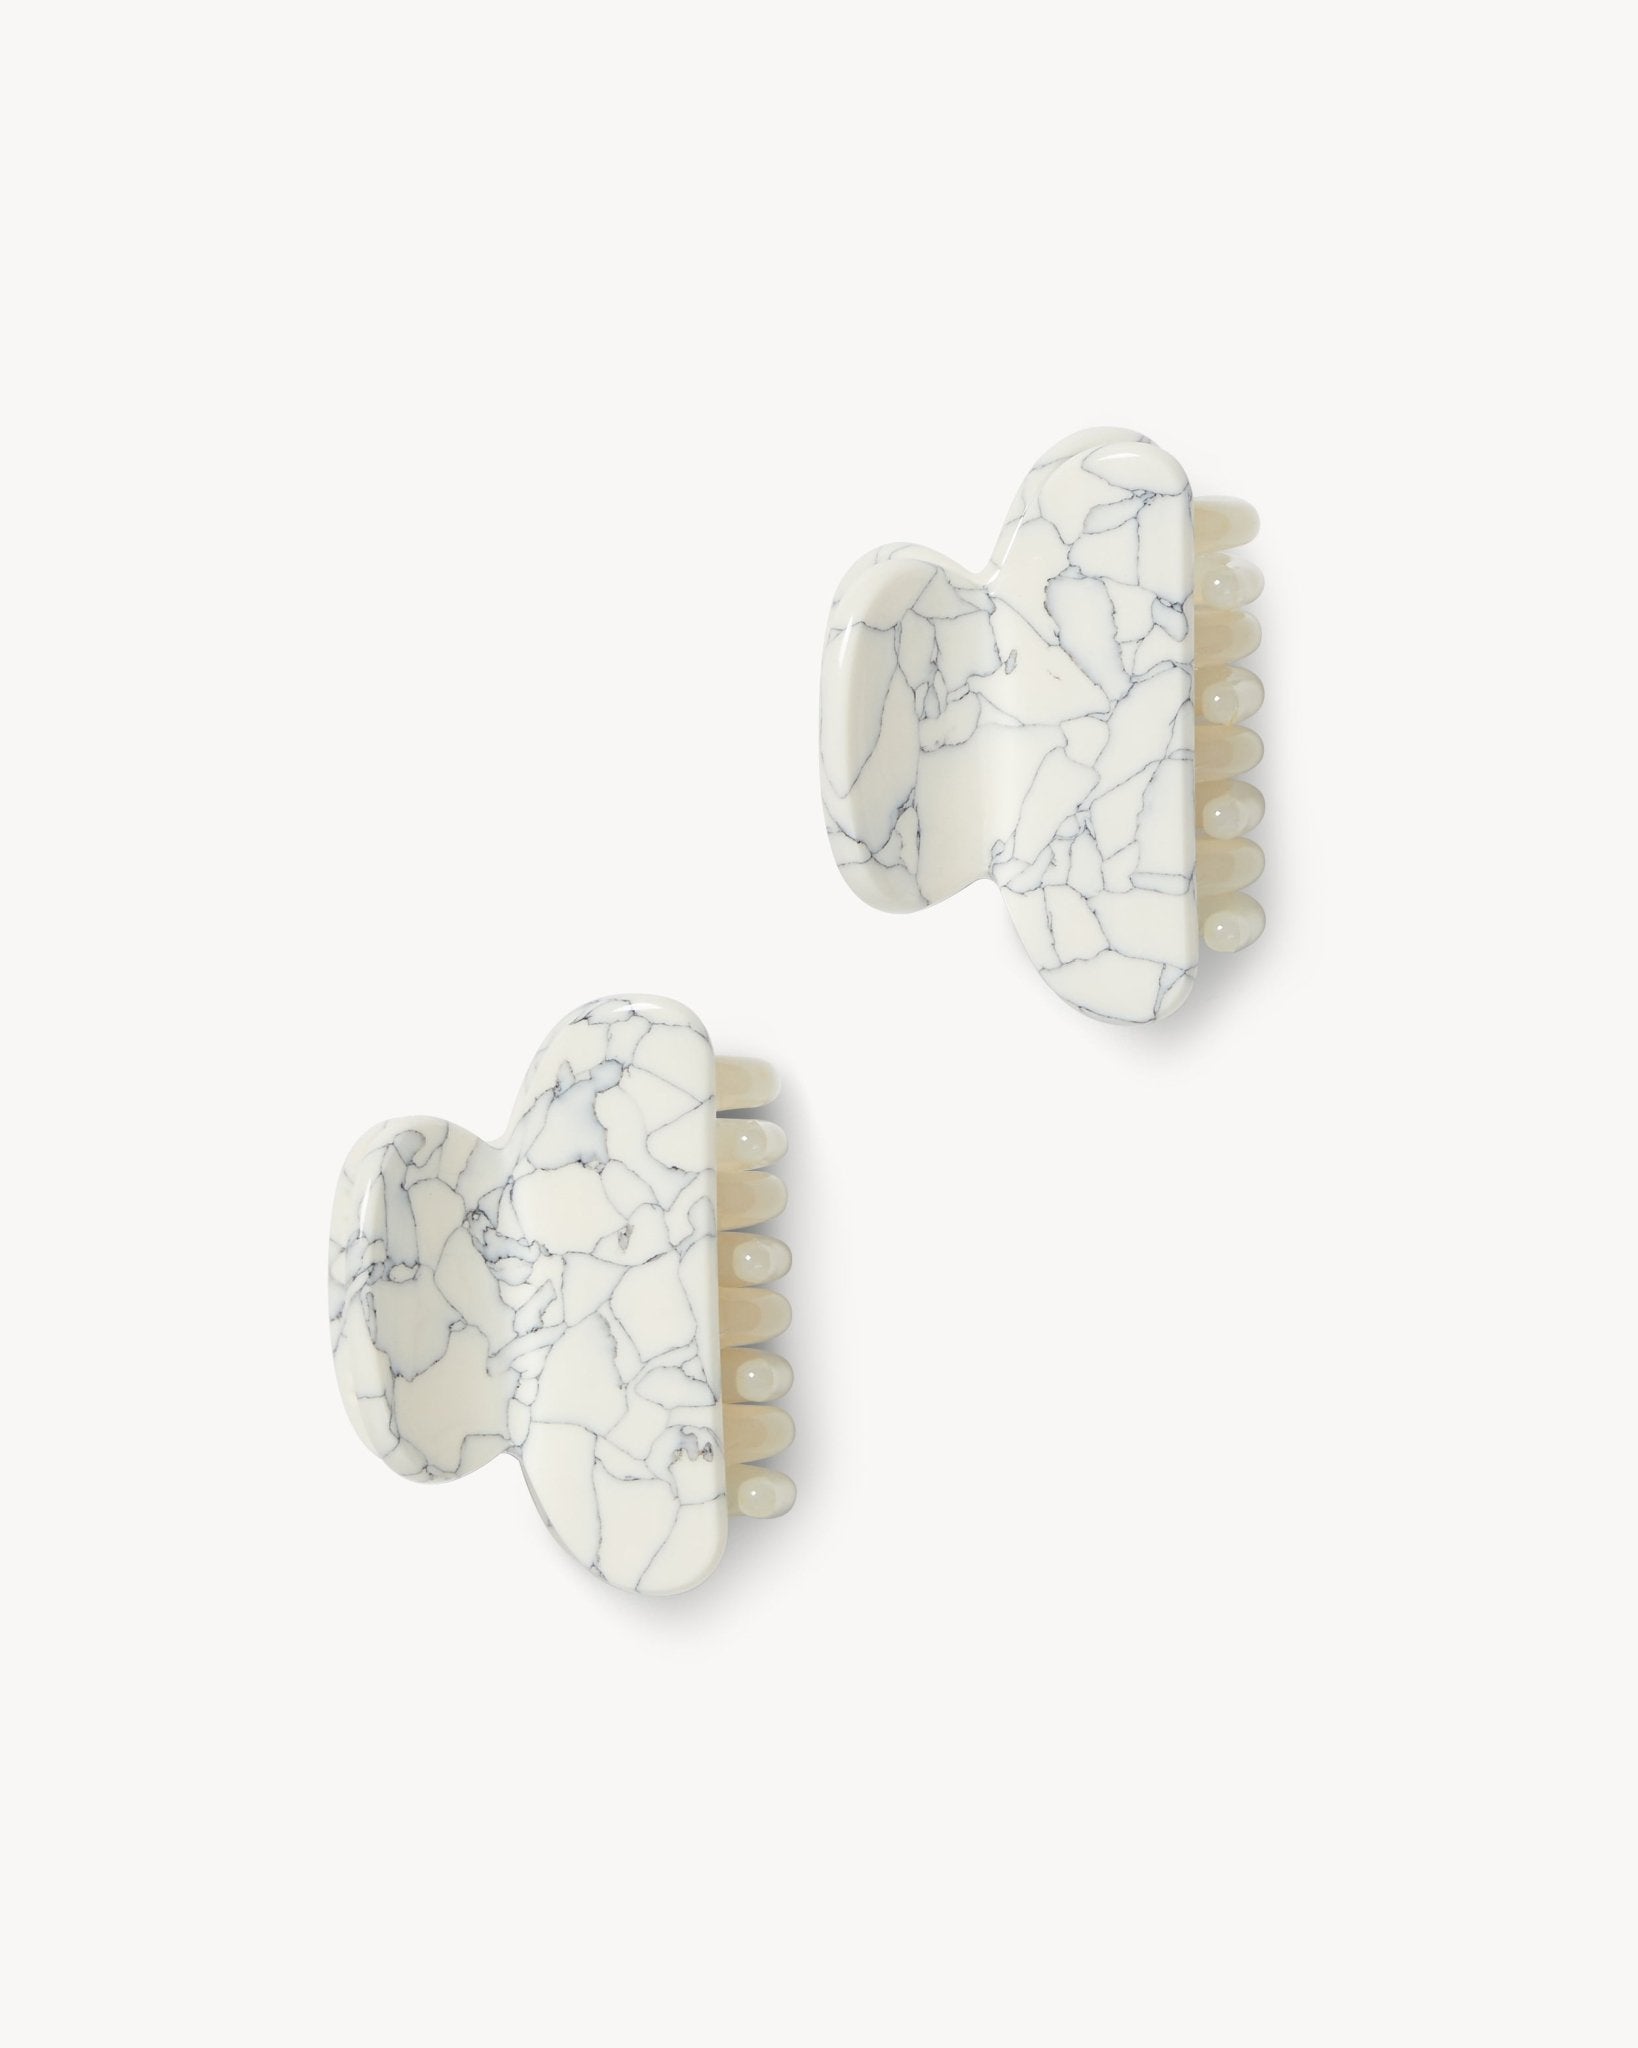 Twin Heirloom Claws in Marble - MACHETE